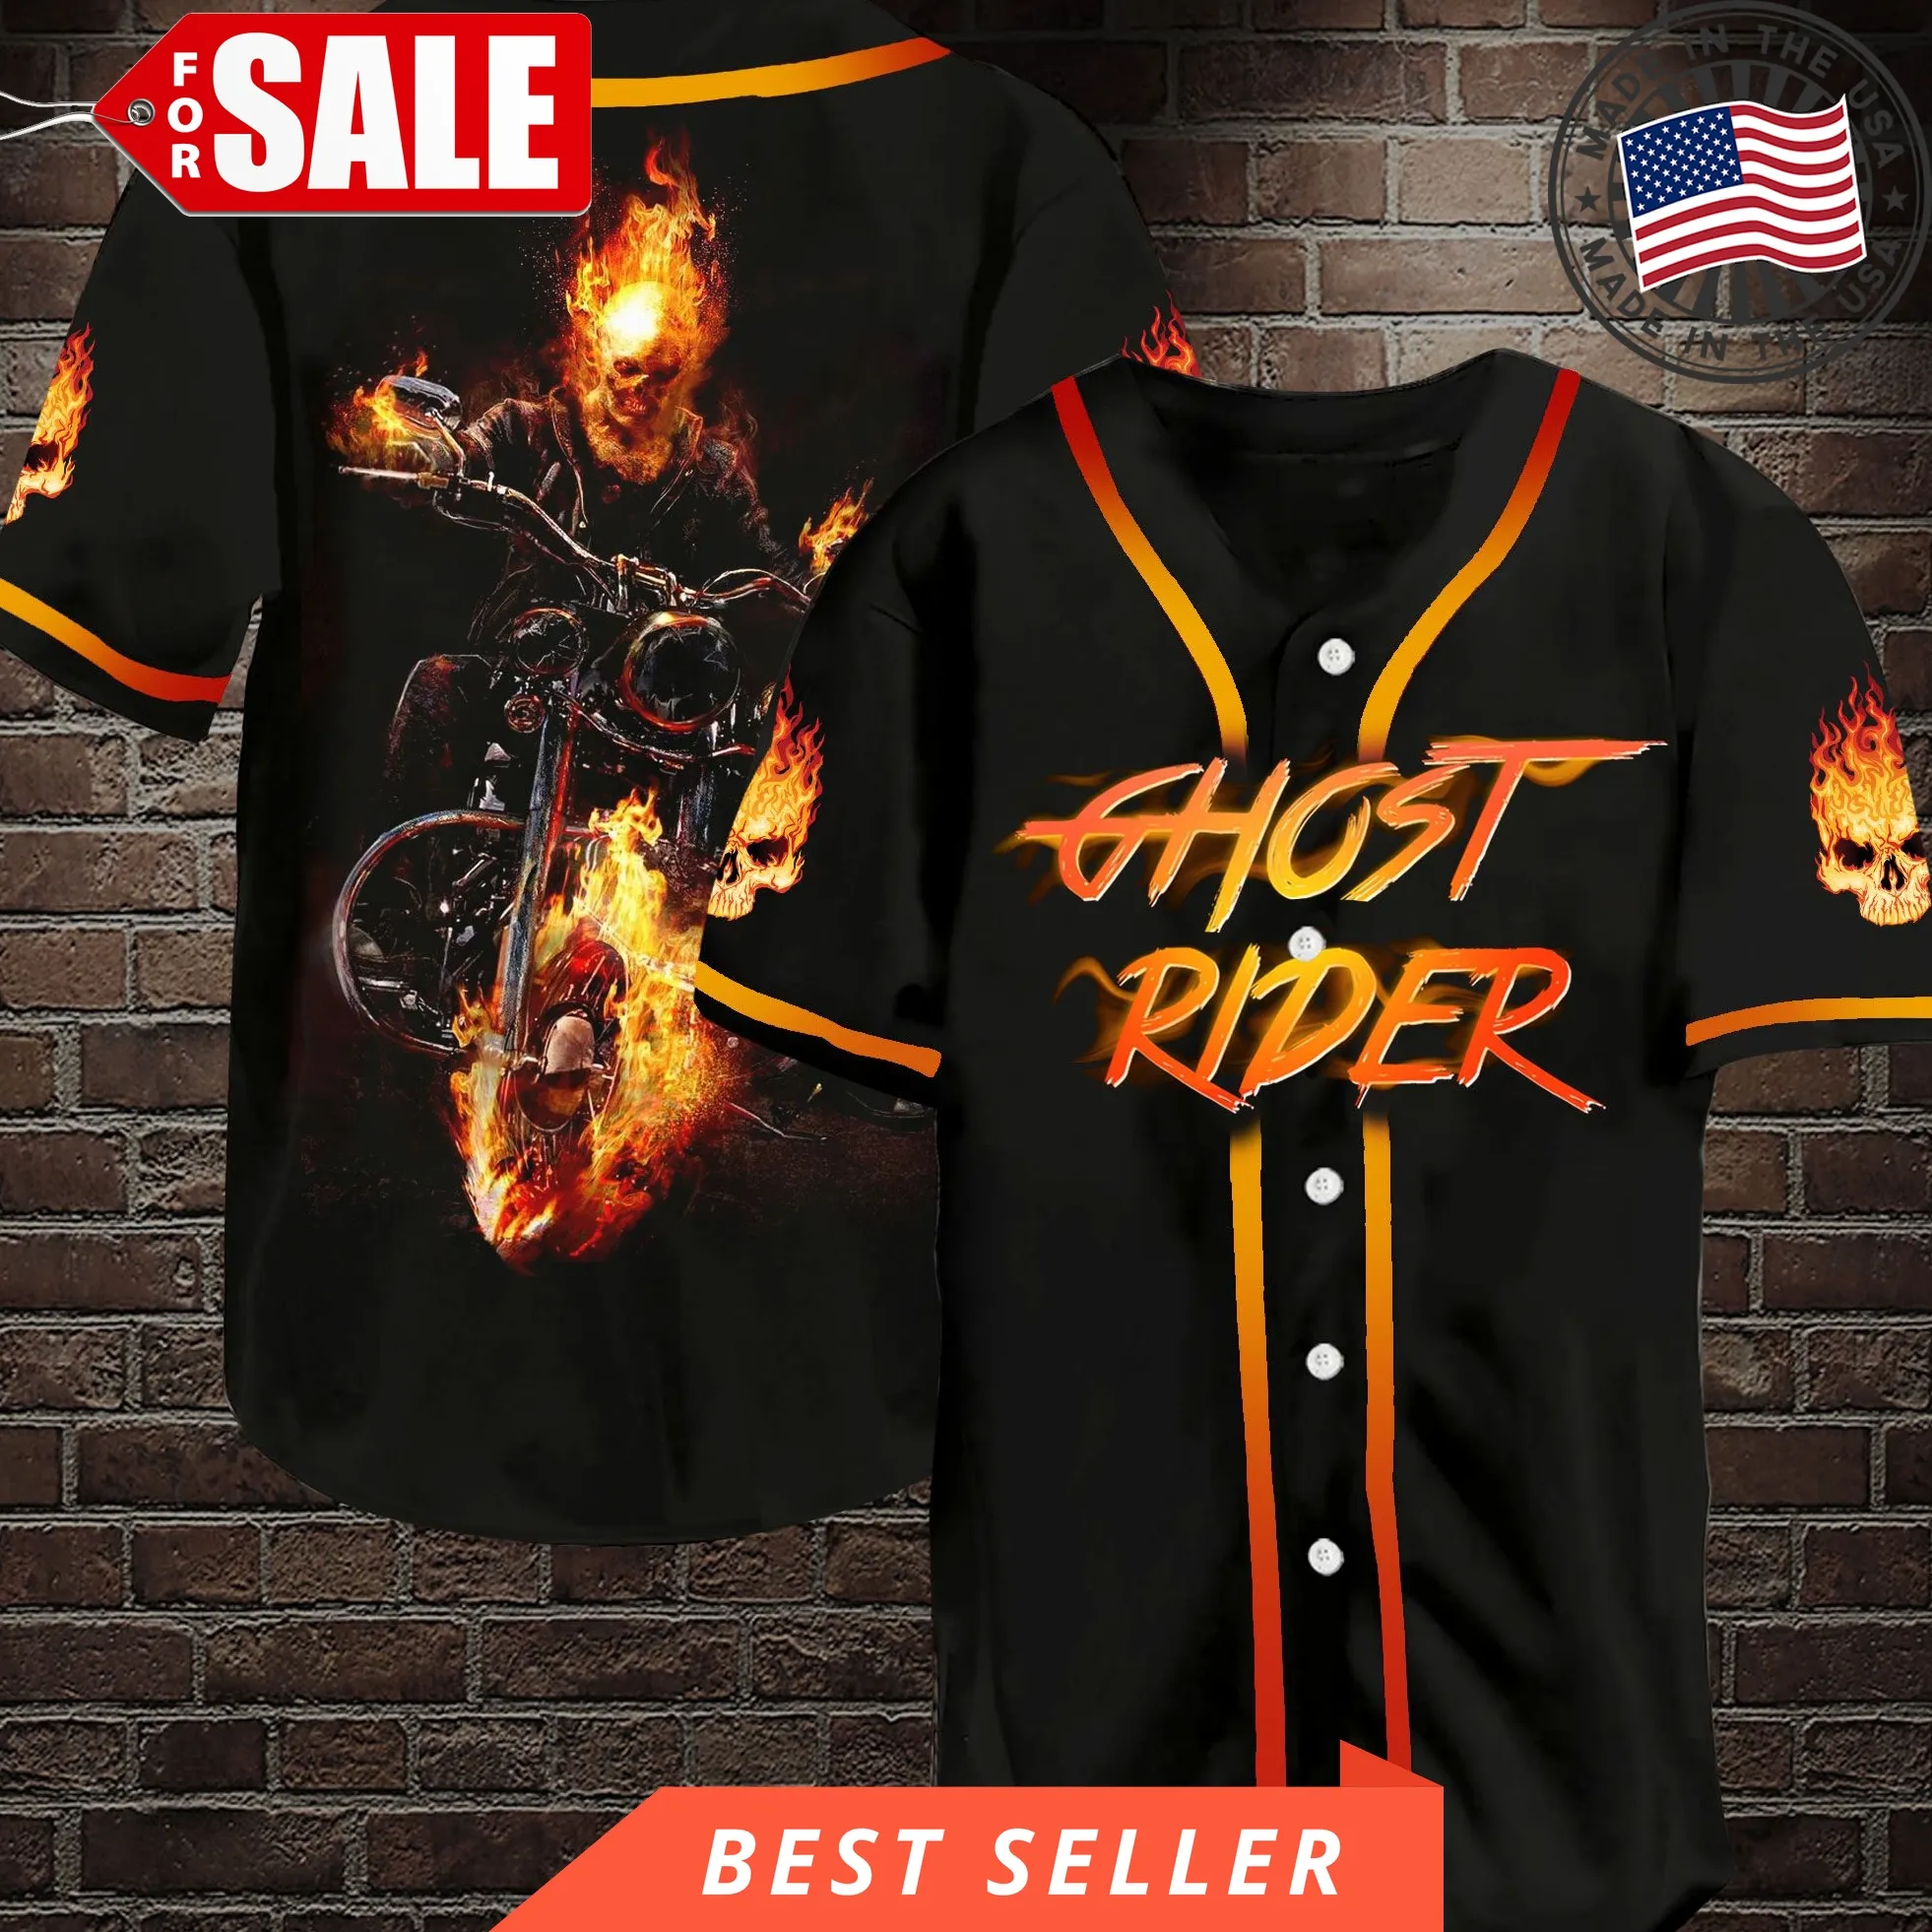 Ghost Rider Baseball Jersey Shirt